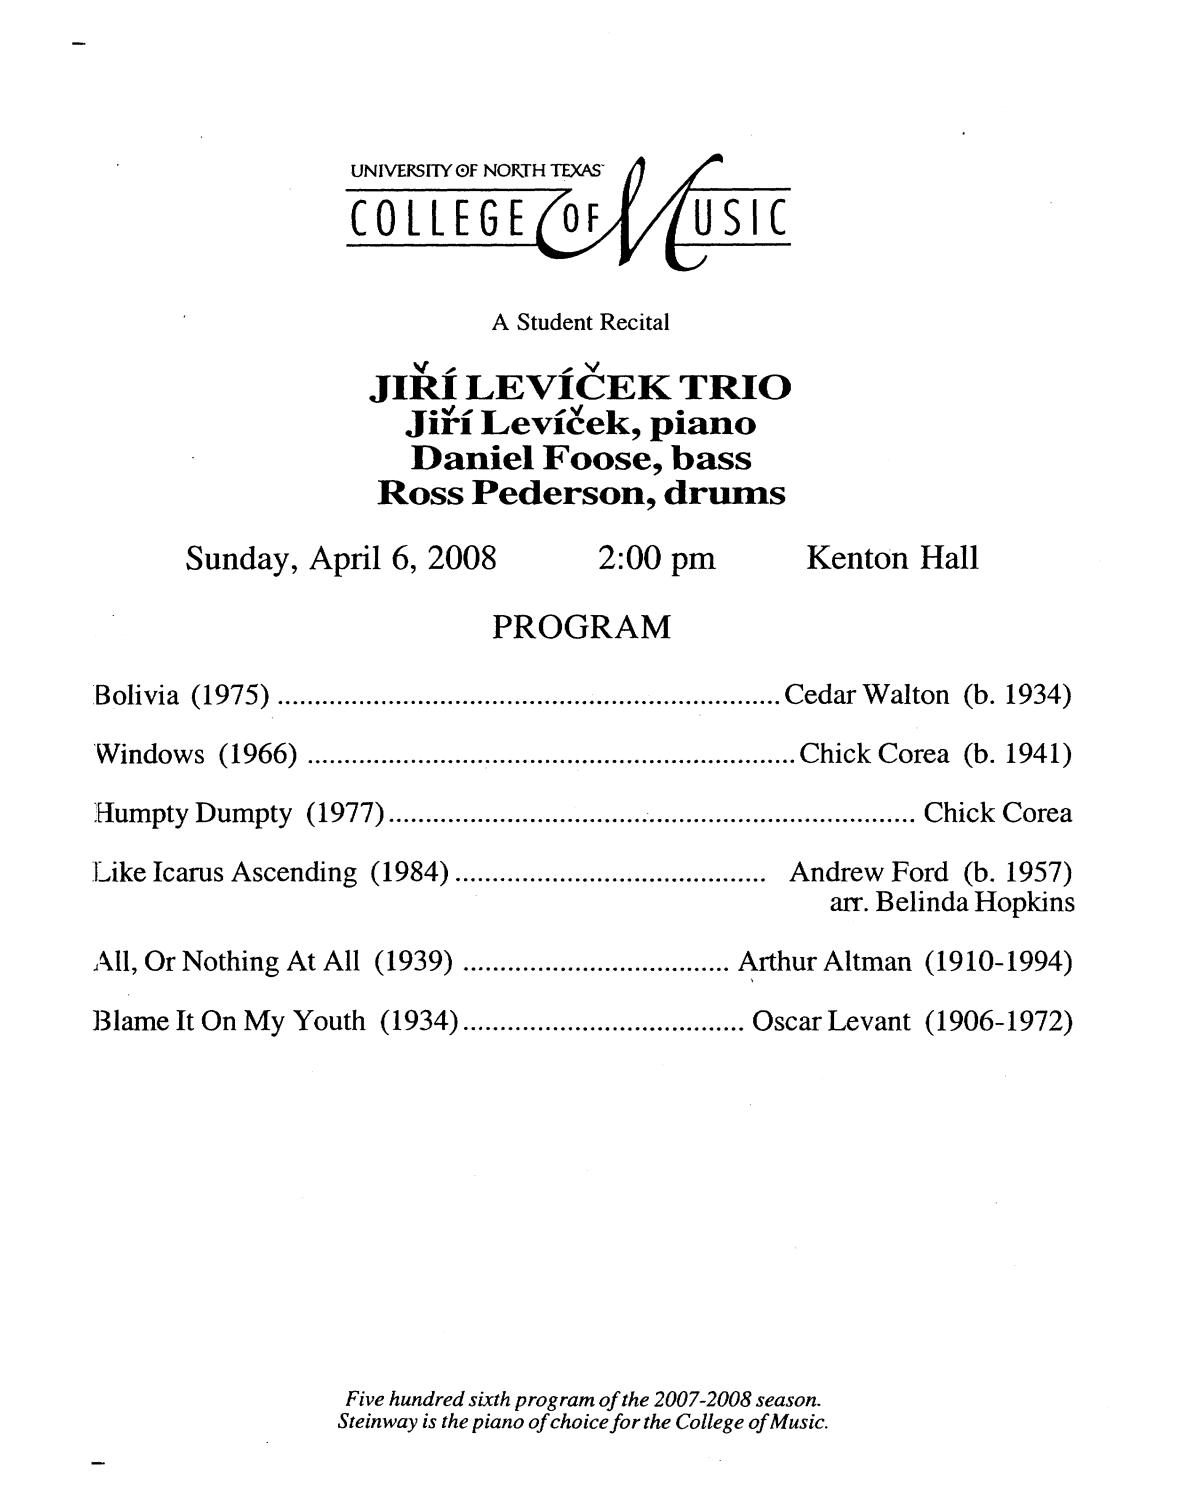 College of Music program book 2007-2008 Student Performances Vol. 2
                                                
                                                    131
                                                